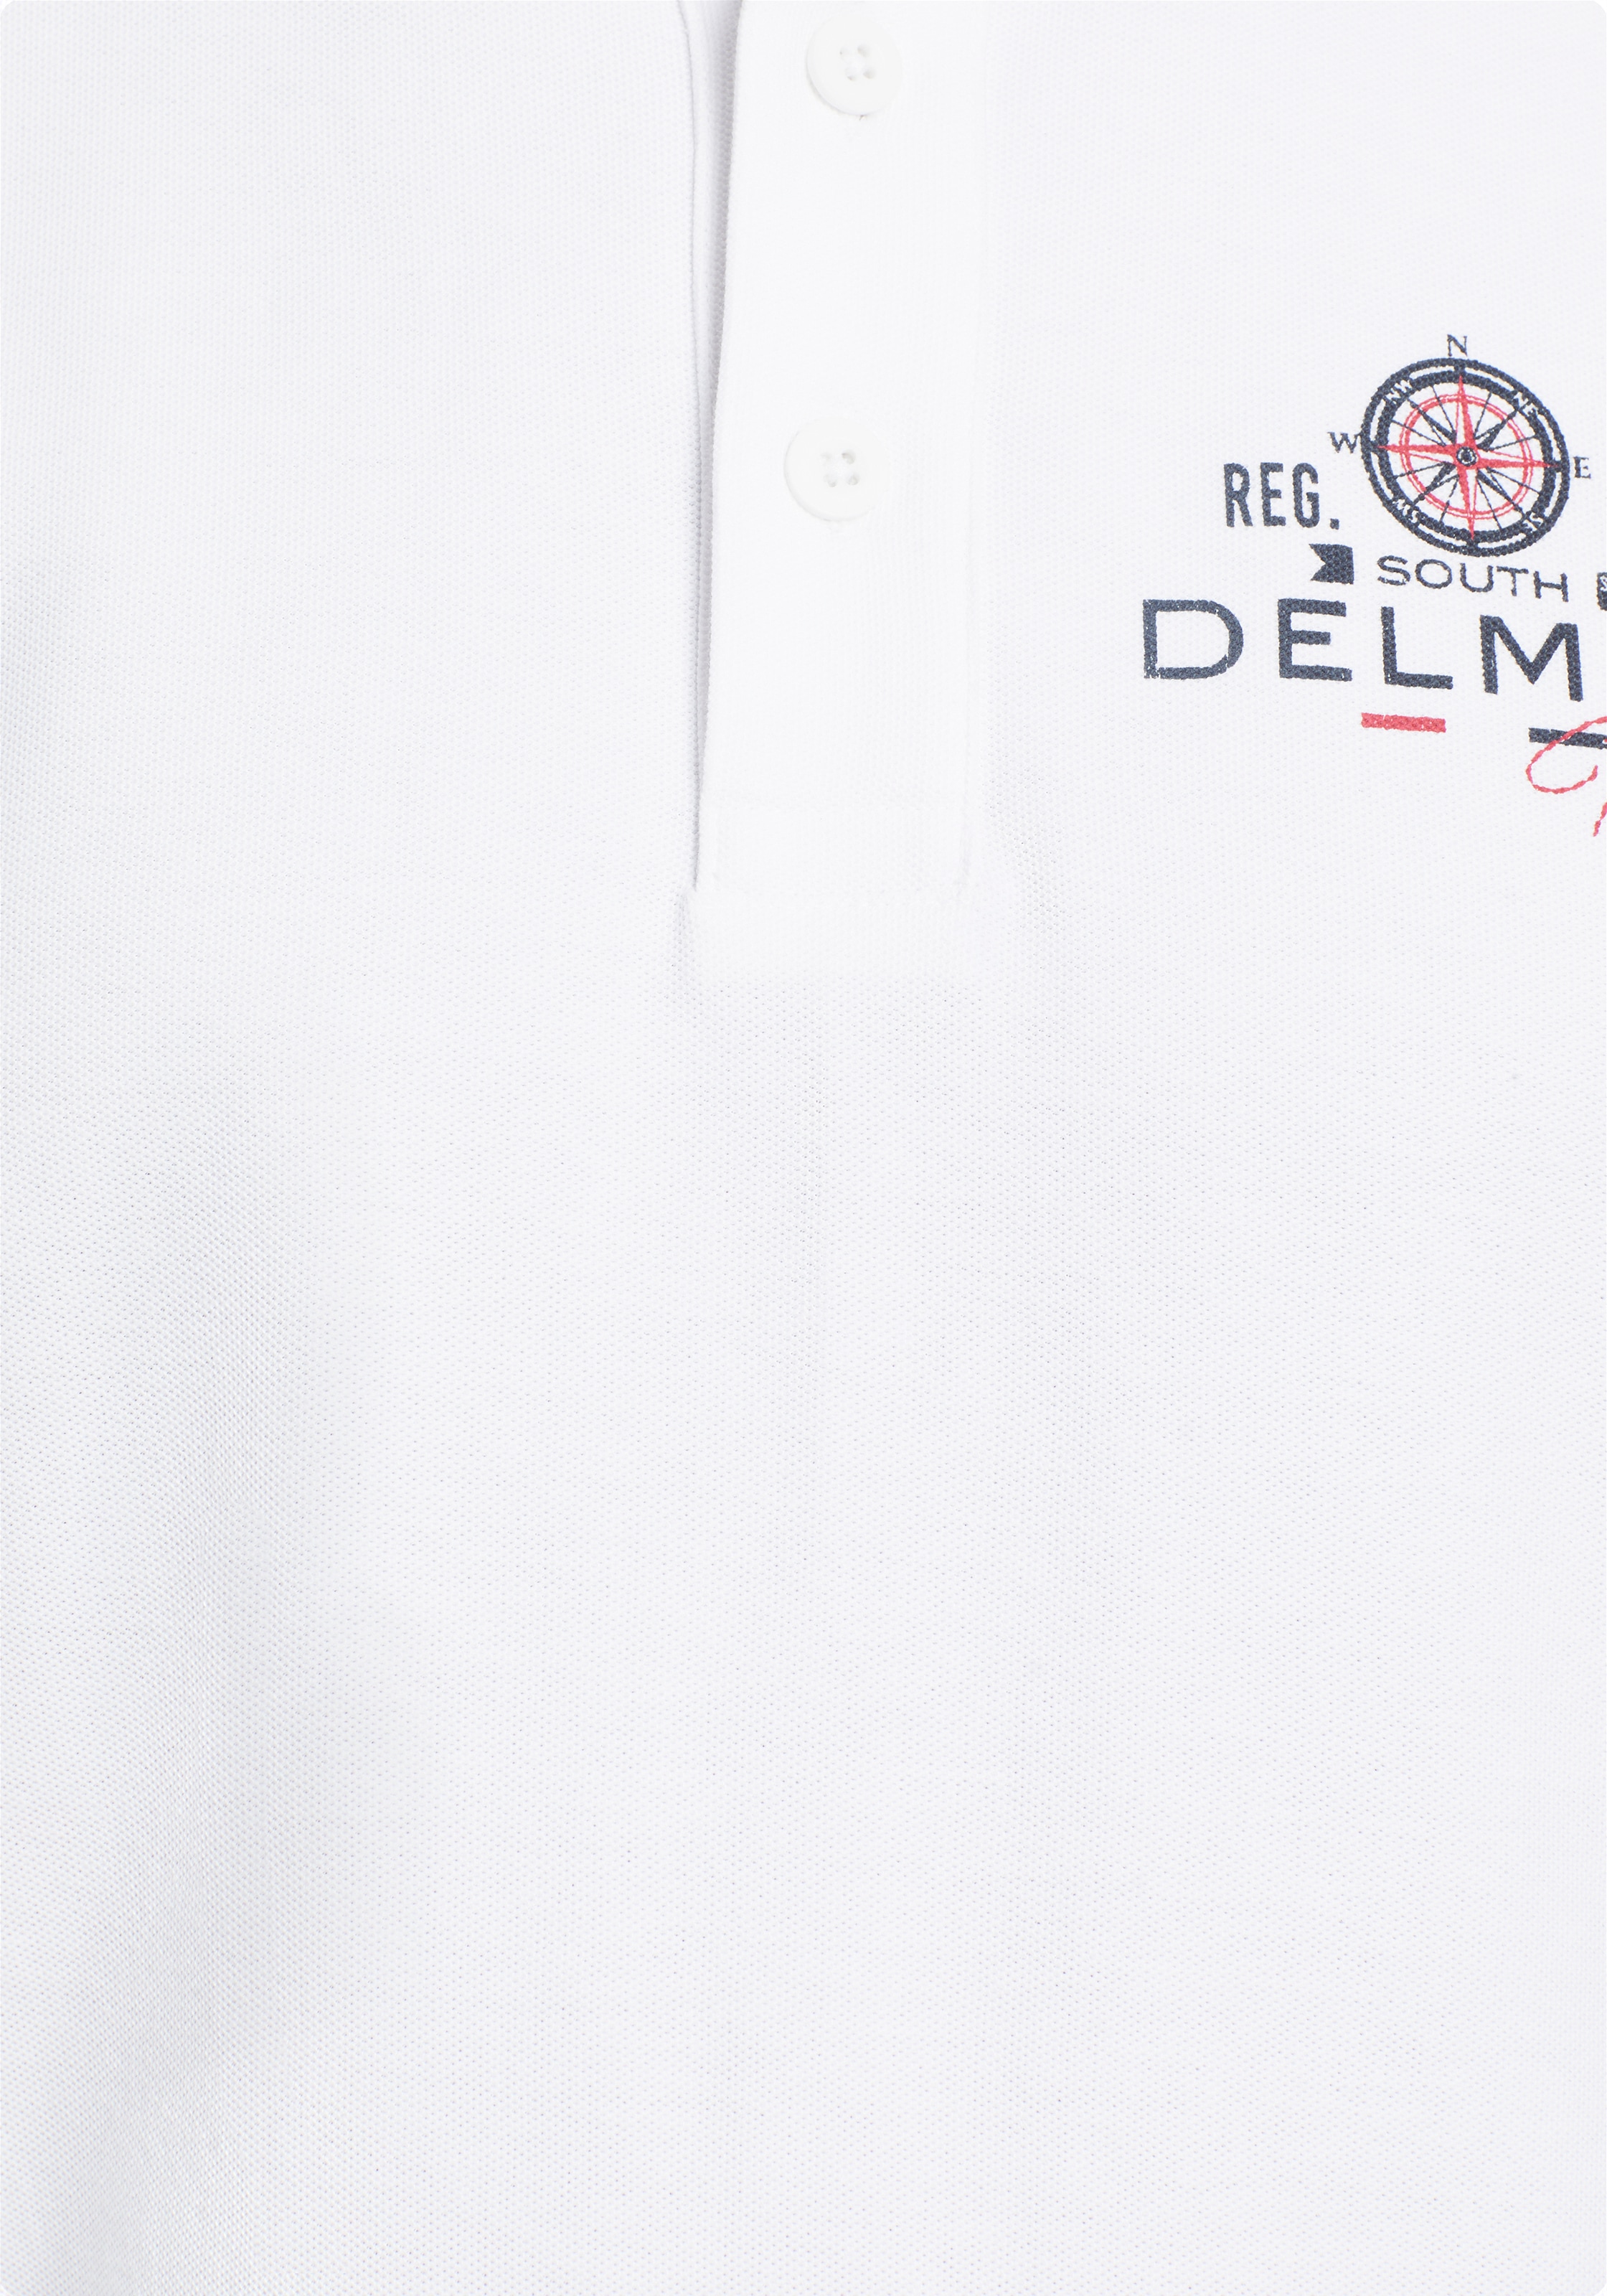 DELMAO Poloshirt, mit Brustprint